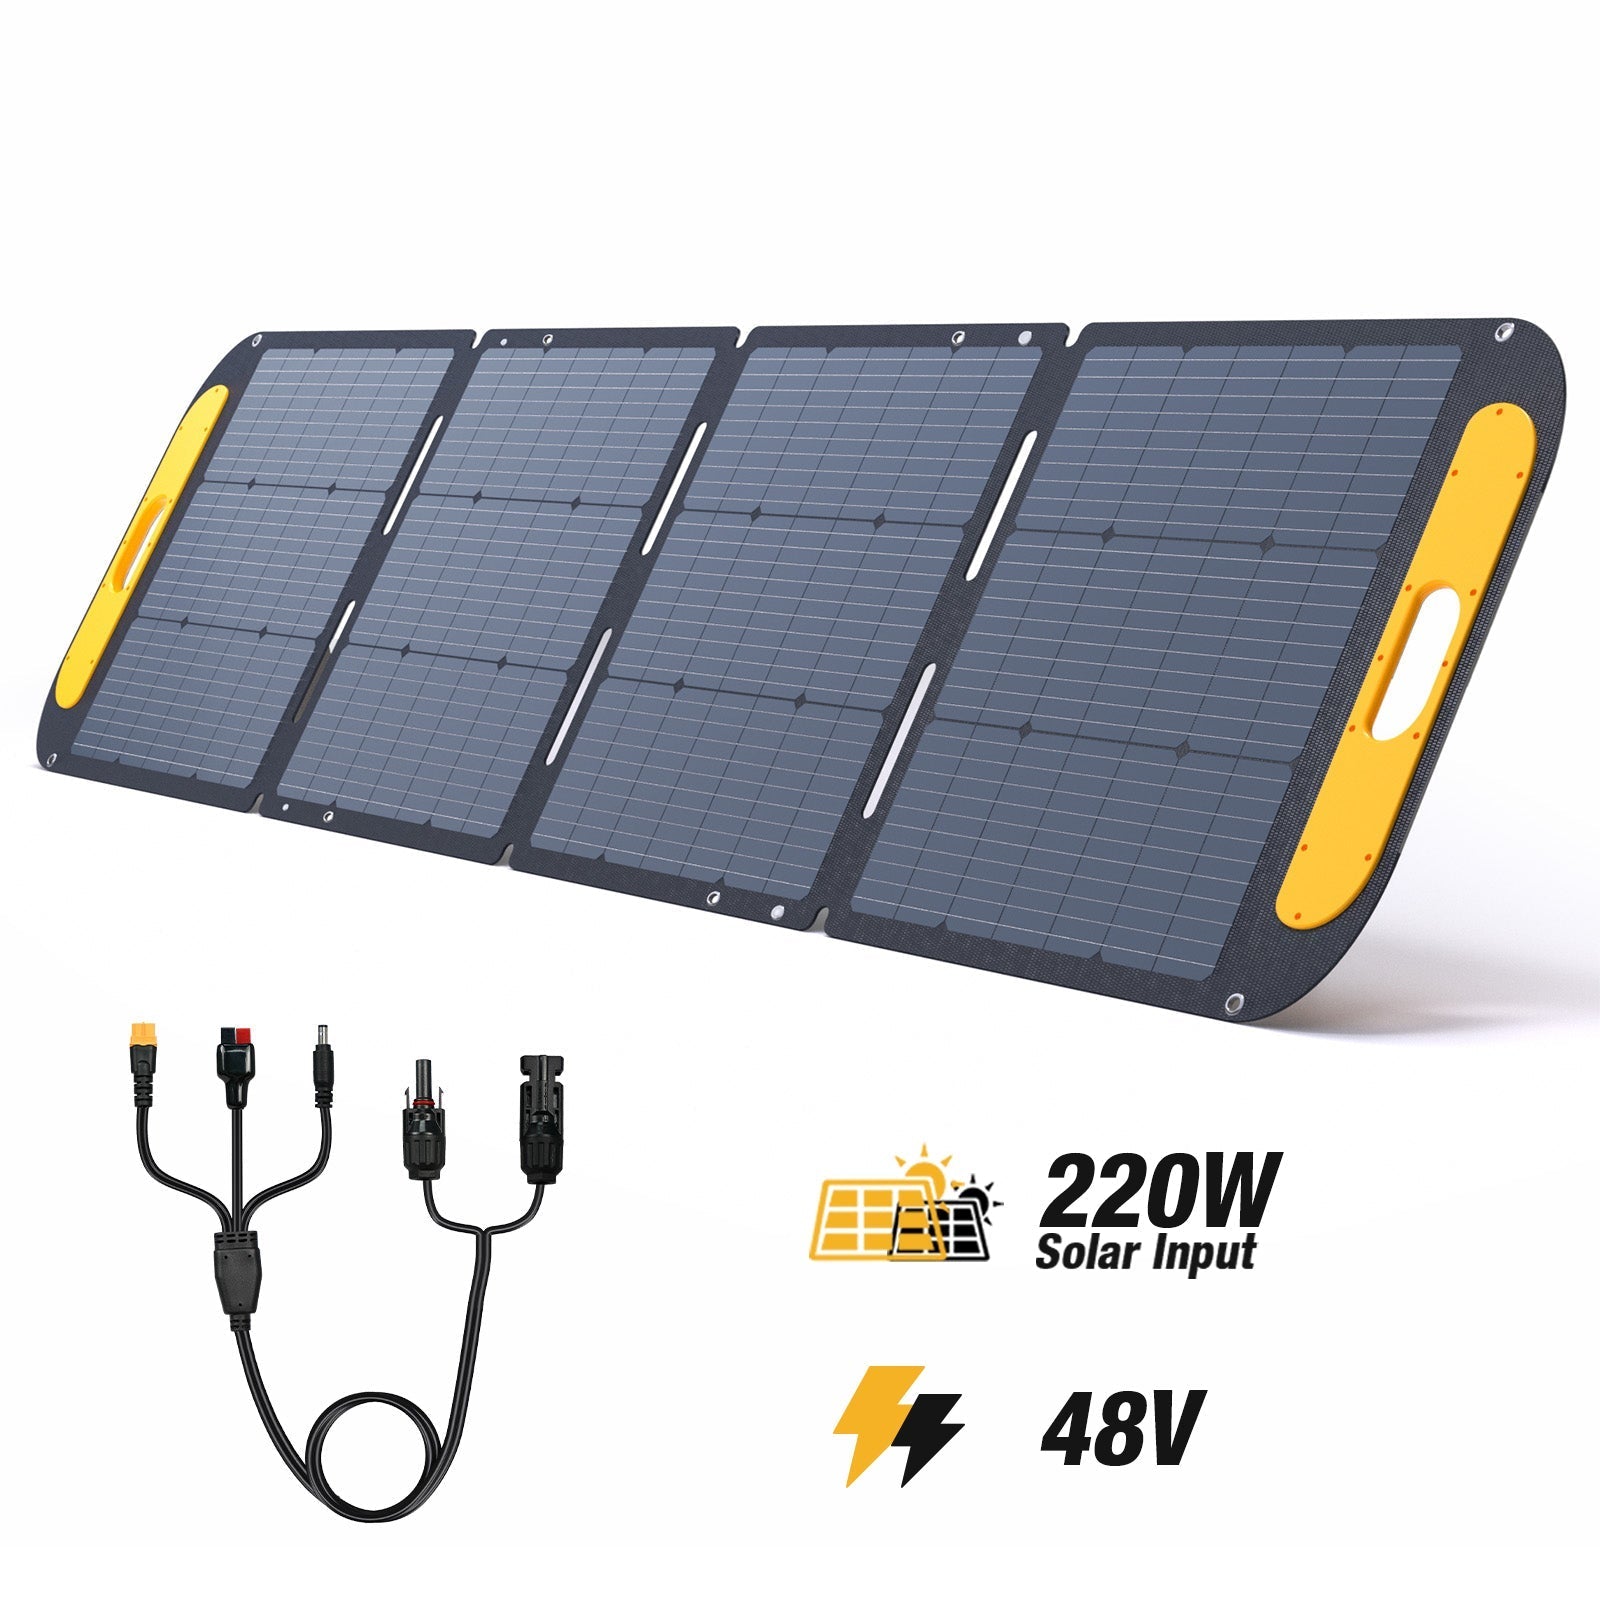 vs220pro-220w-48v solar panel